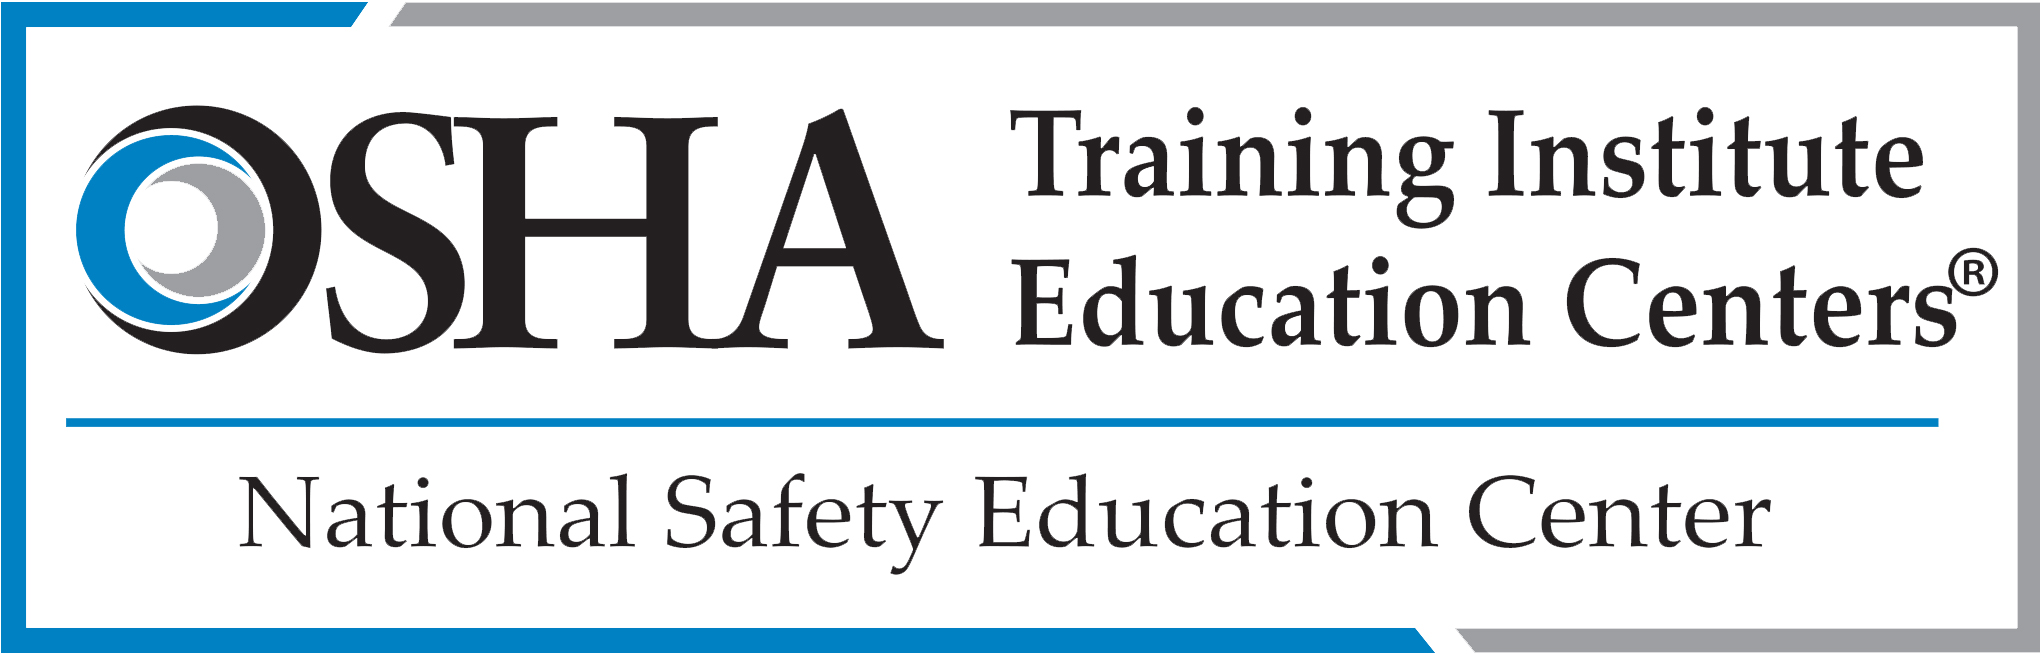 National Safety Education Center Logo